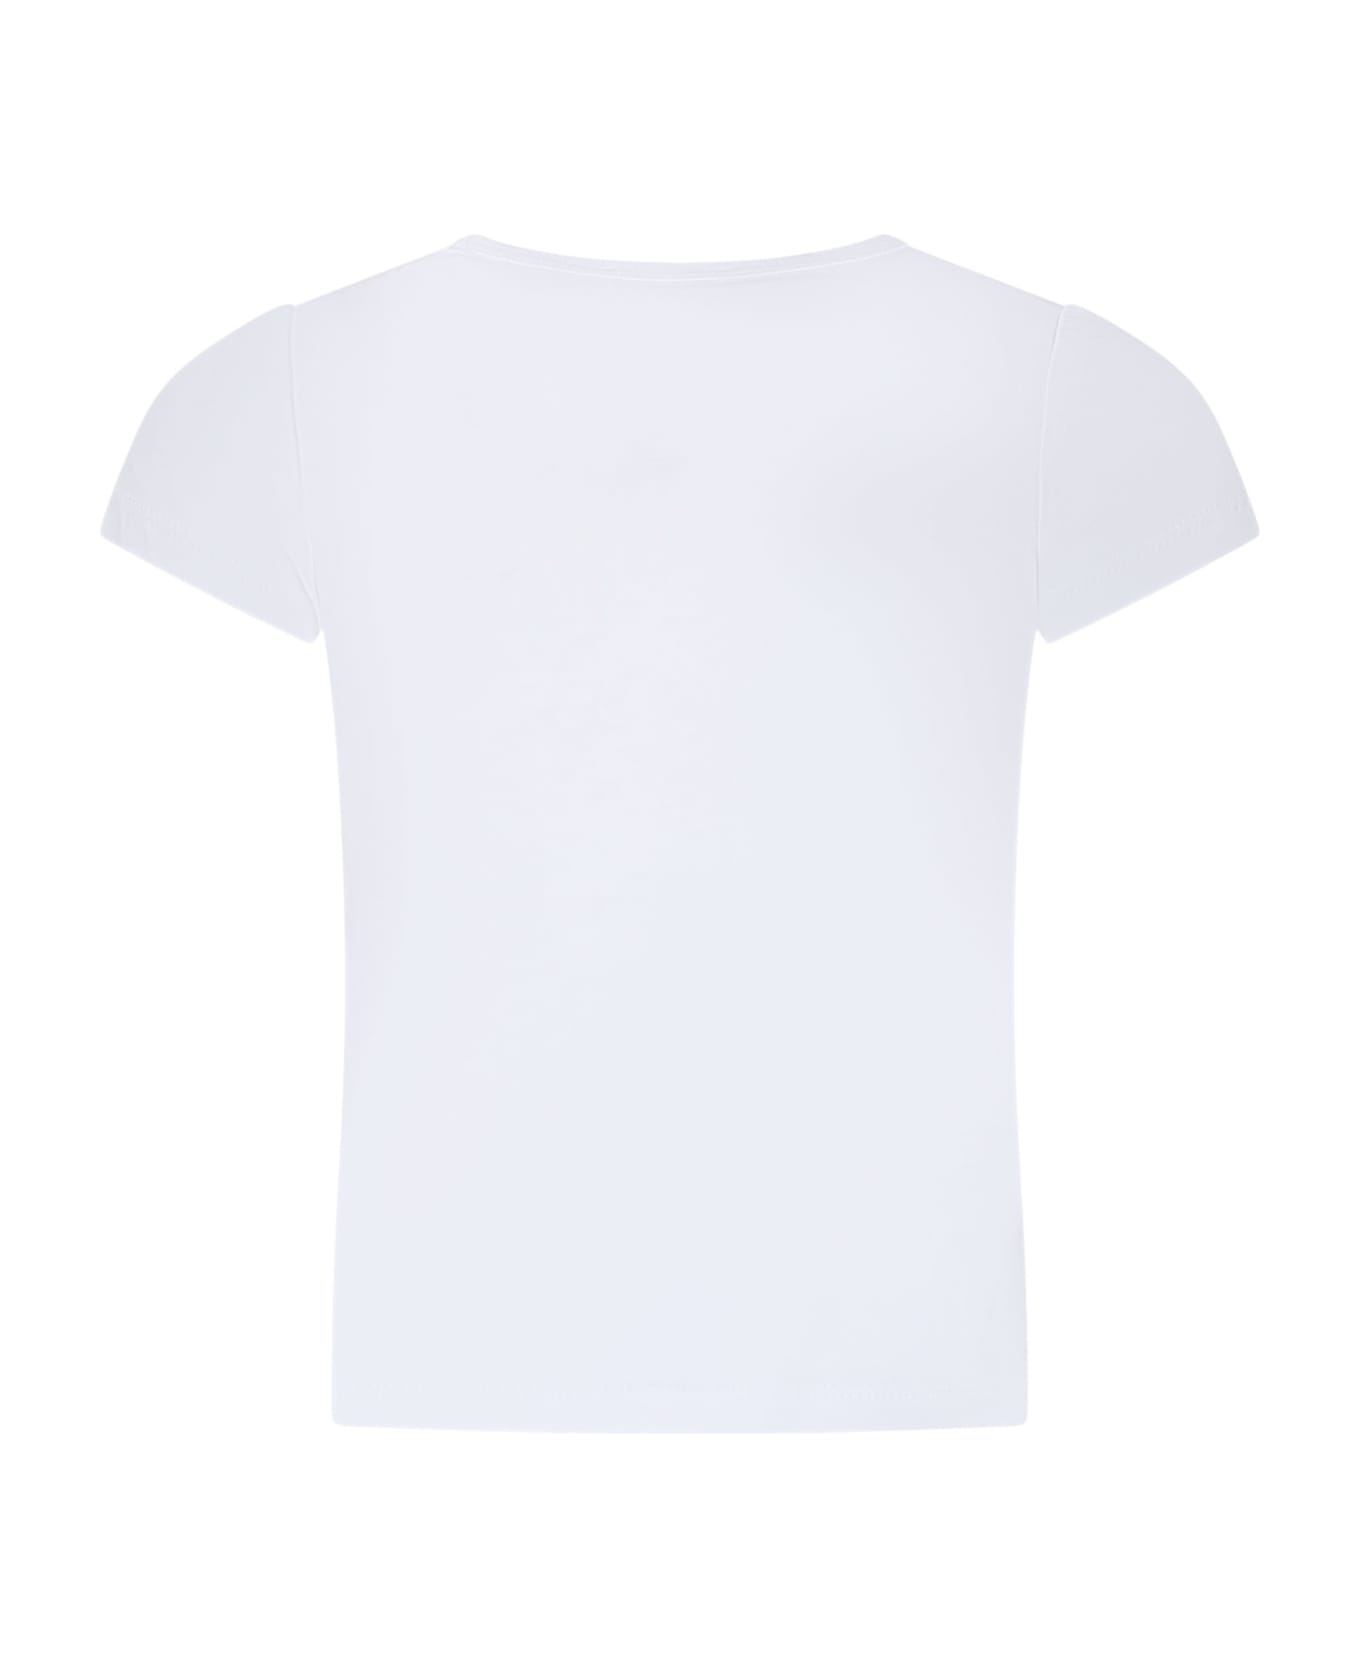 Rykiel Enfant White T-shirt For Girl With Logo And Rhinestones - White